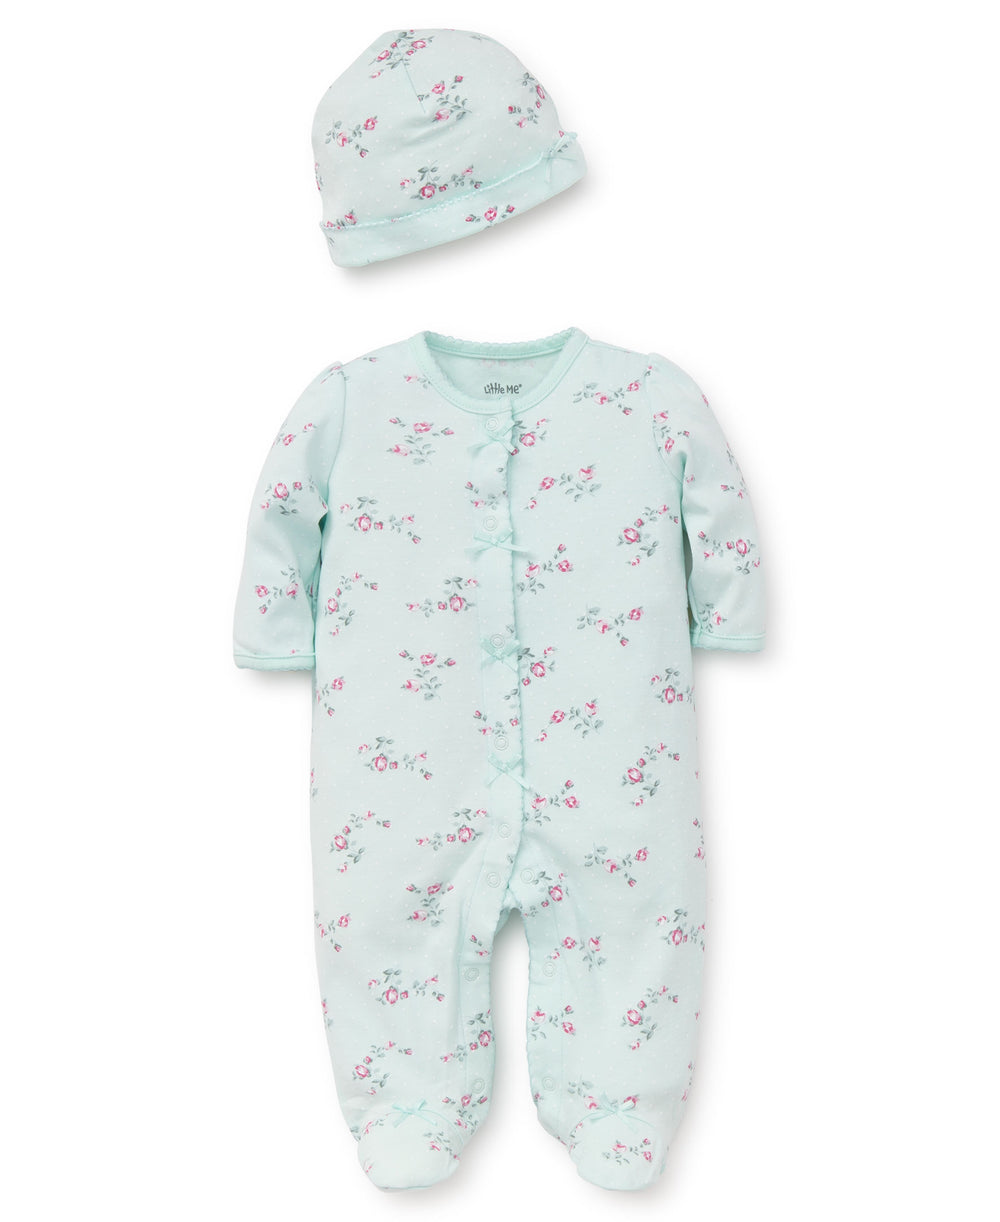 Little Me Infant Girls Footie Pajamas